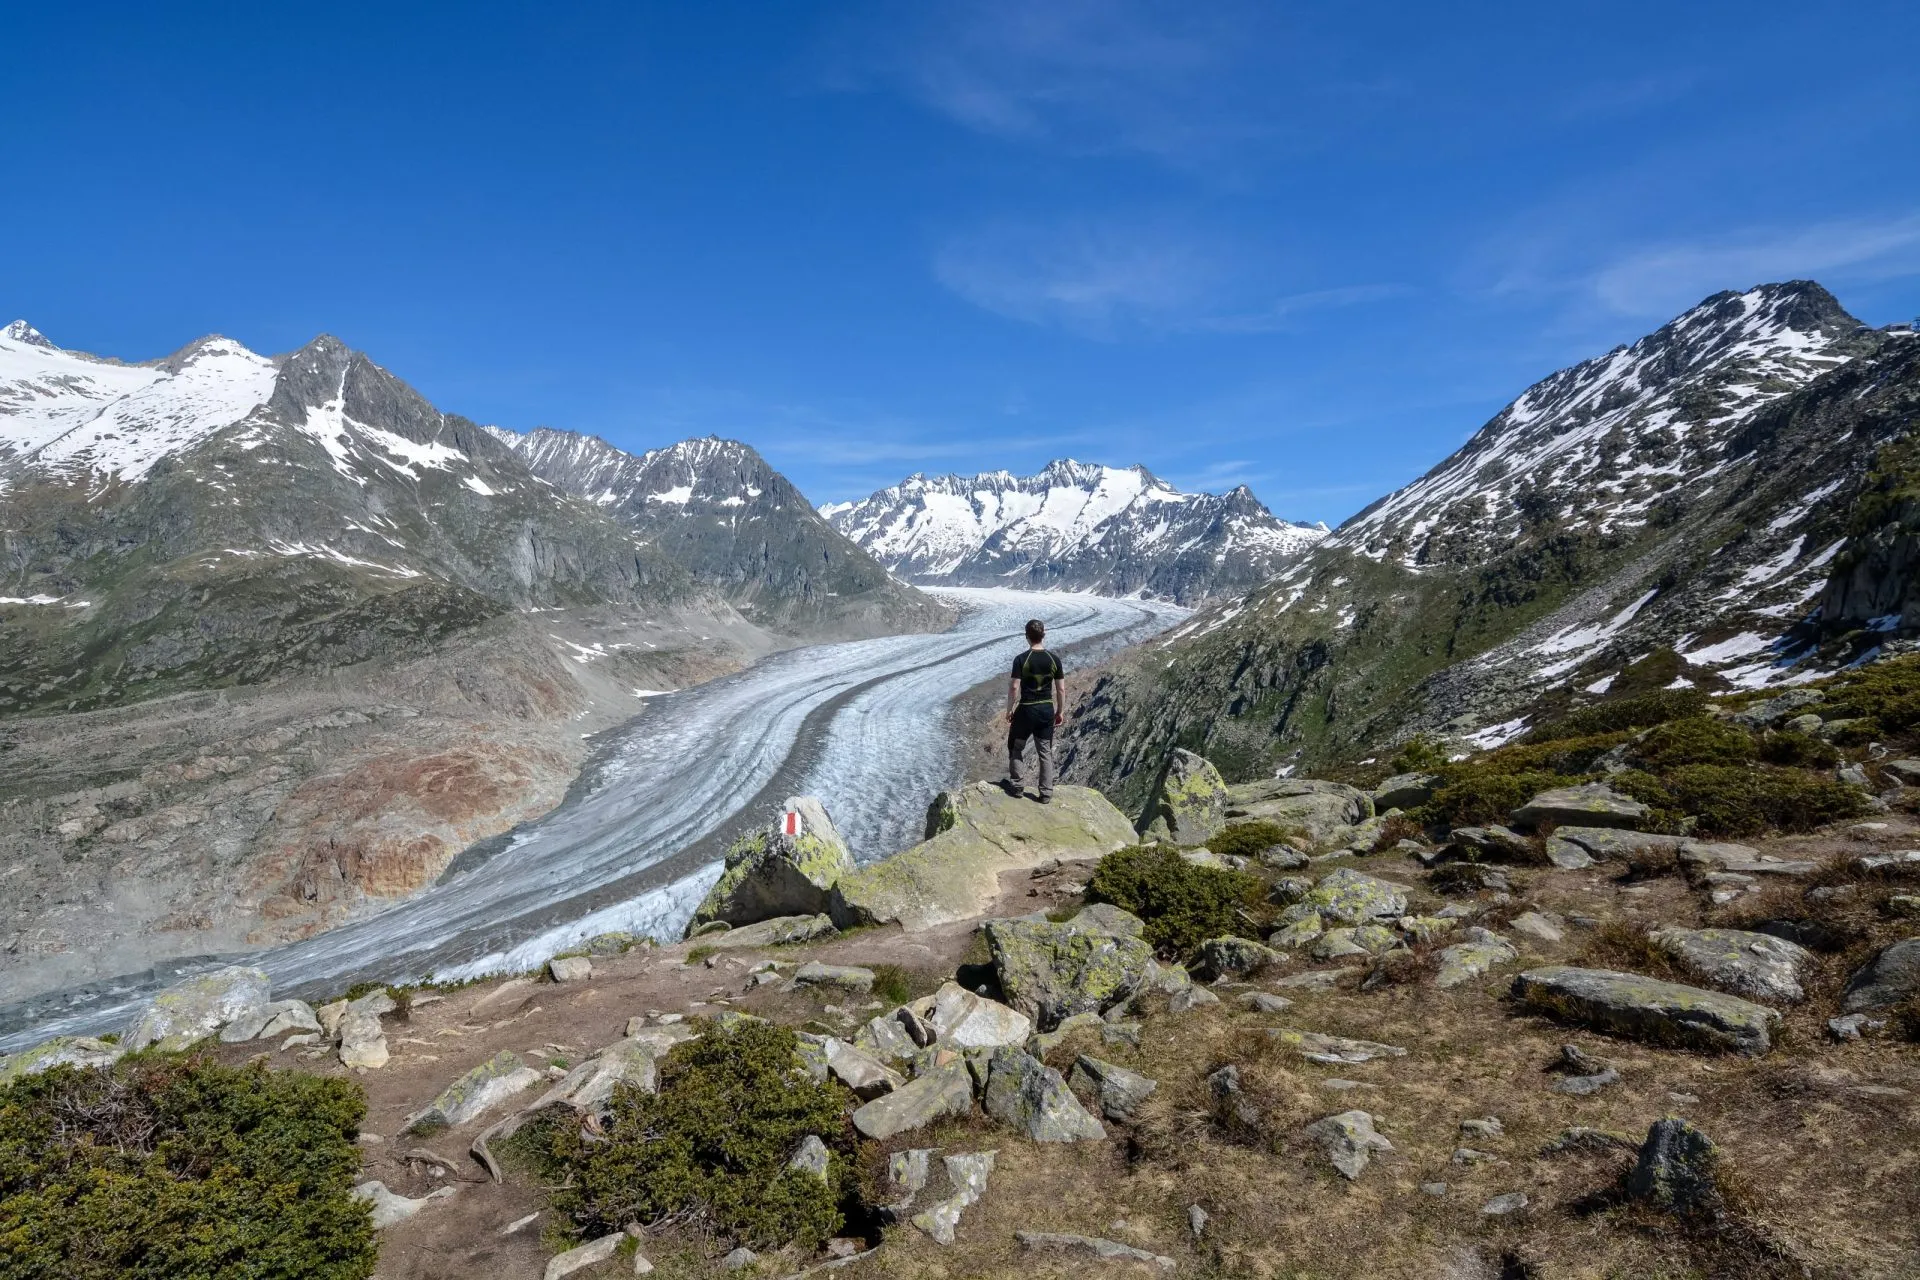 View above the aletsch glacier